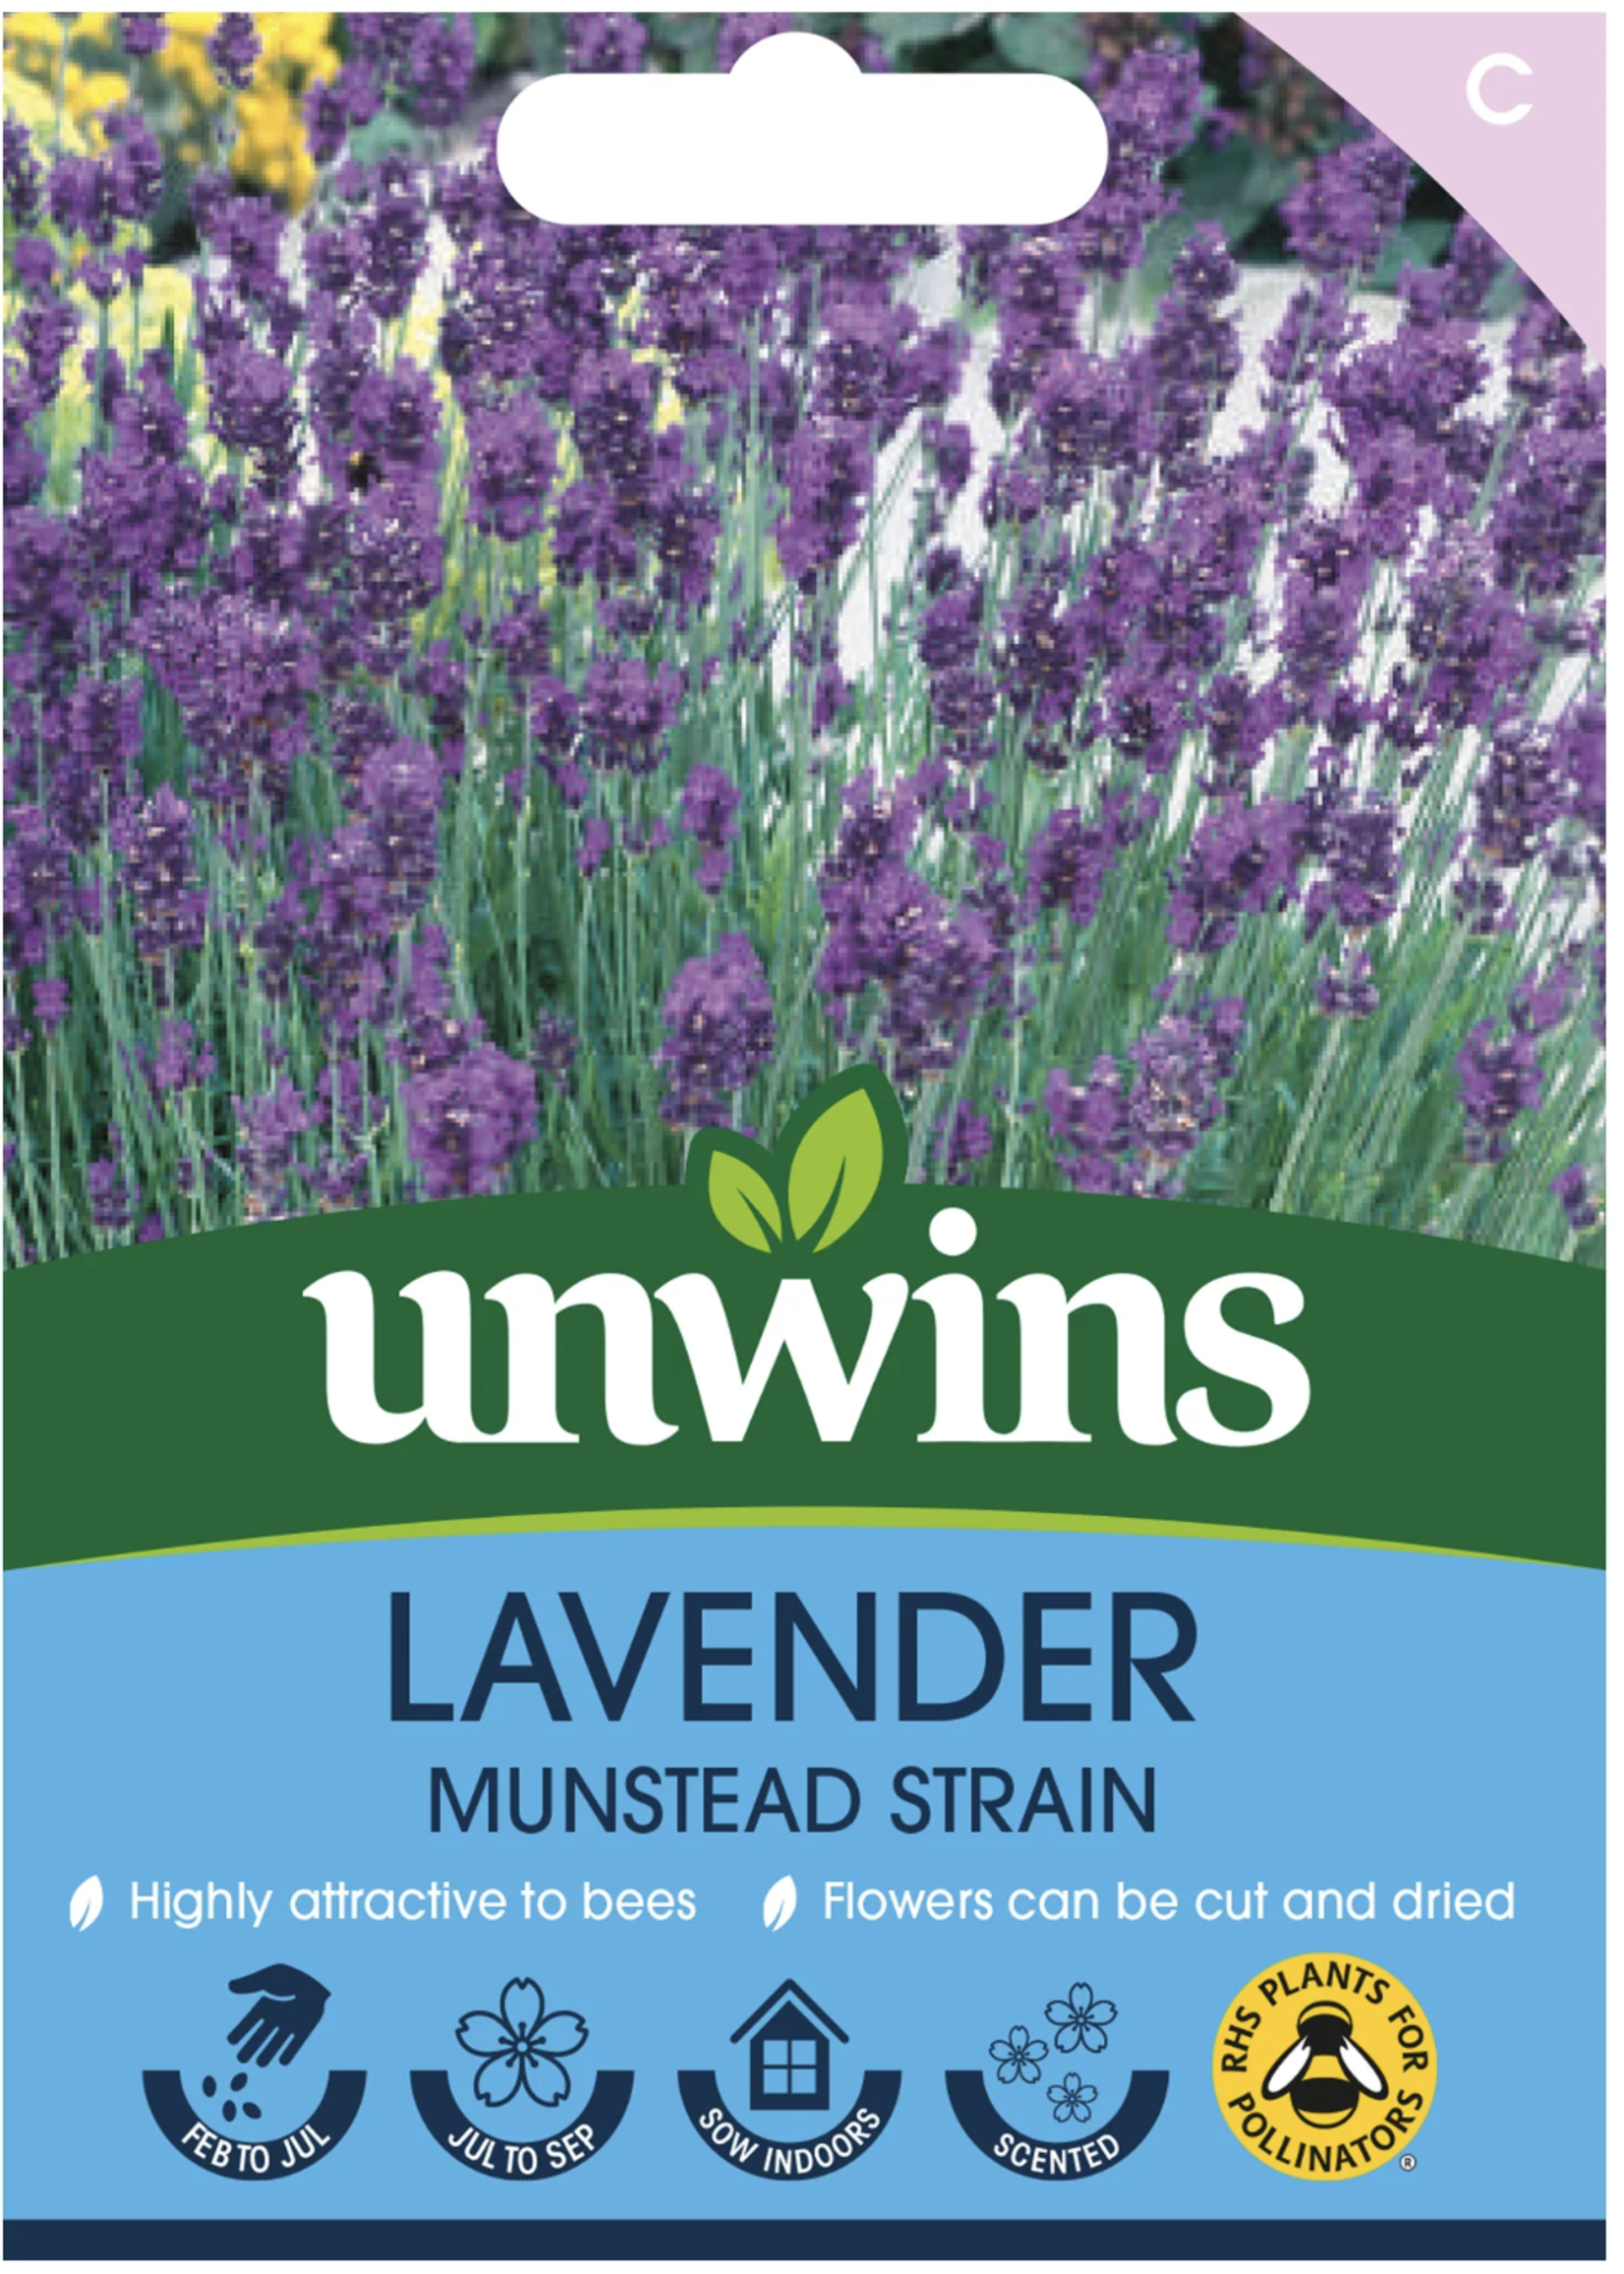 Unwins Lavender - Munstead Strain